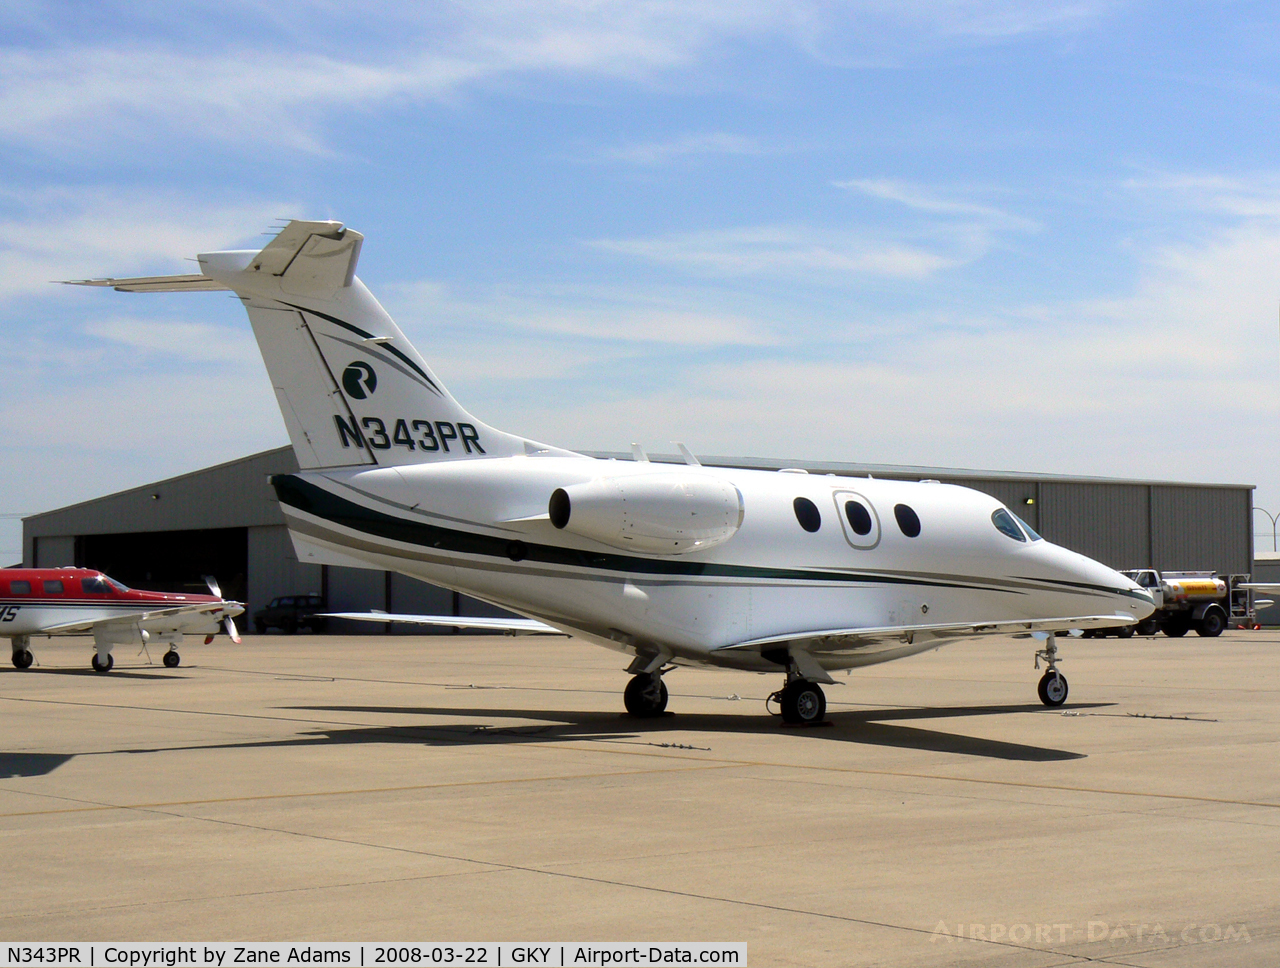 N343PR, 2001 Raytheon Aircraft Company 390 C/N RB-7, At Arlington Municipal